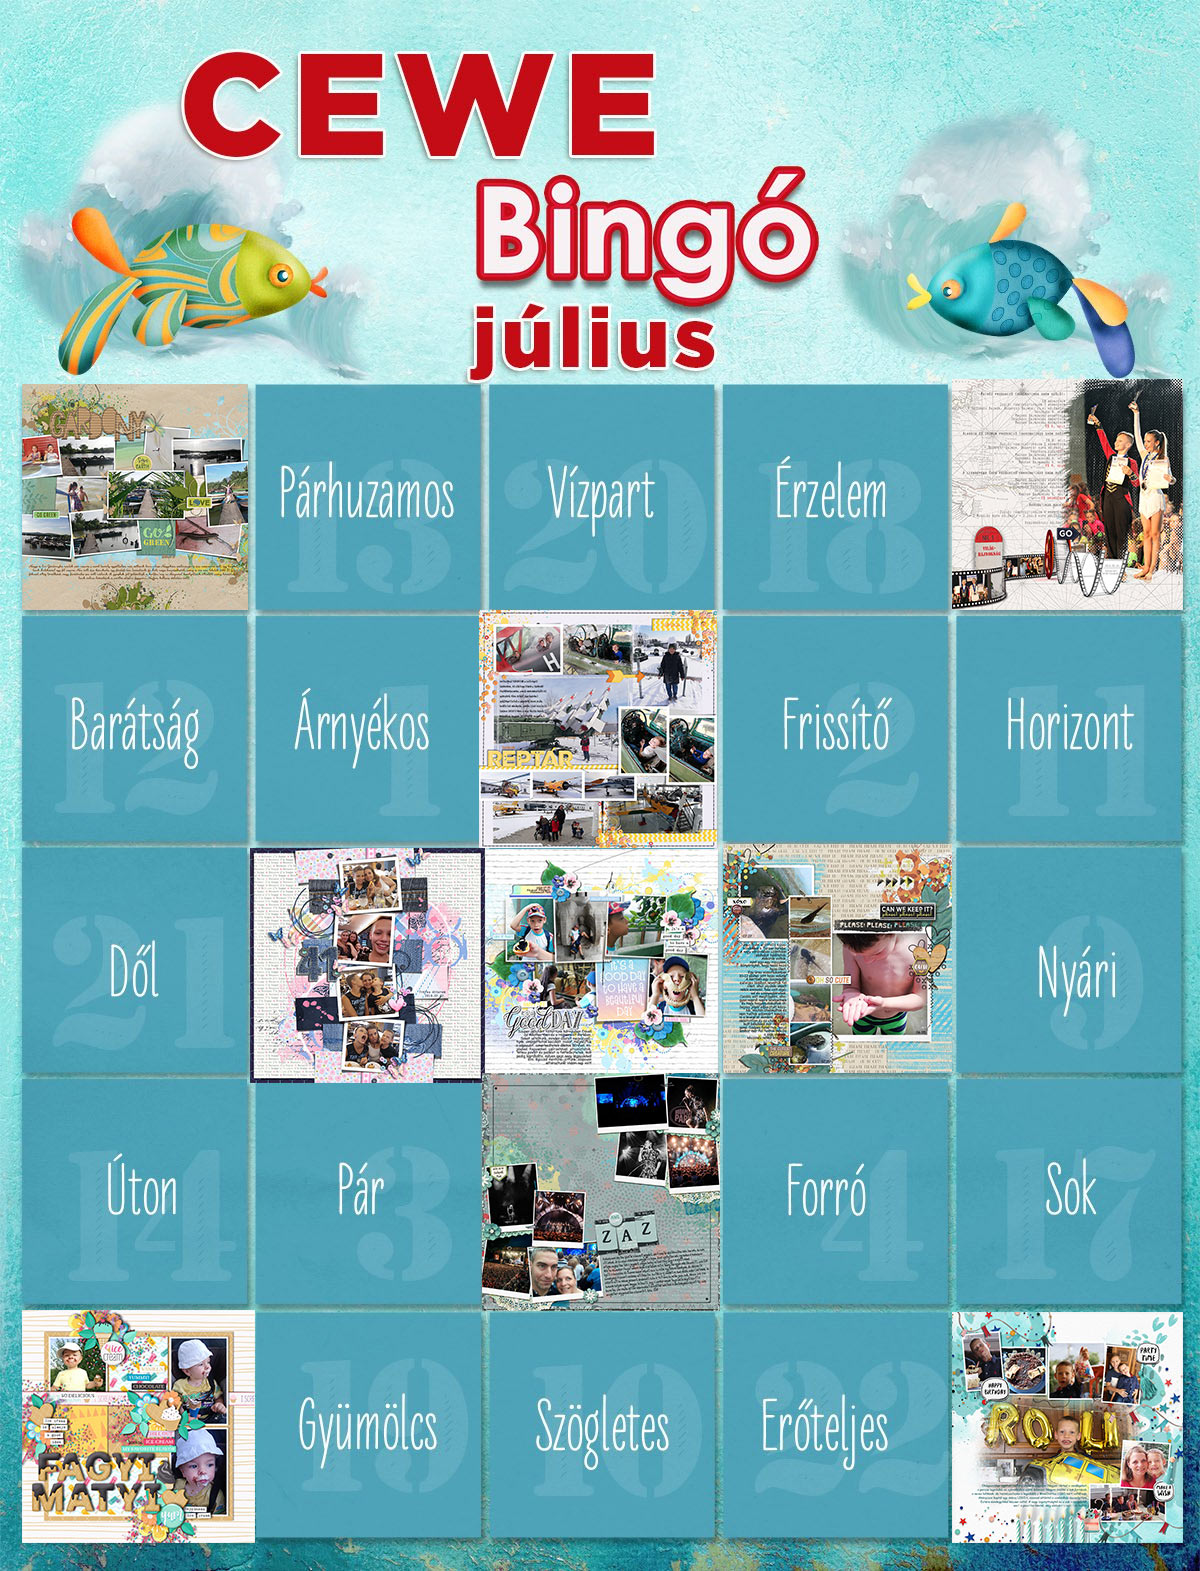 Bingo 9-es júliusra